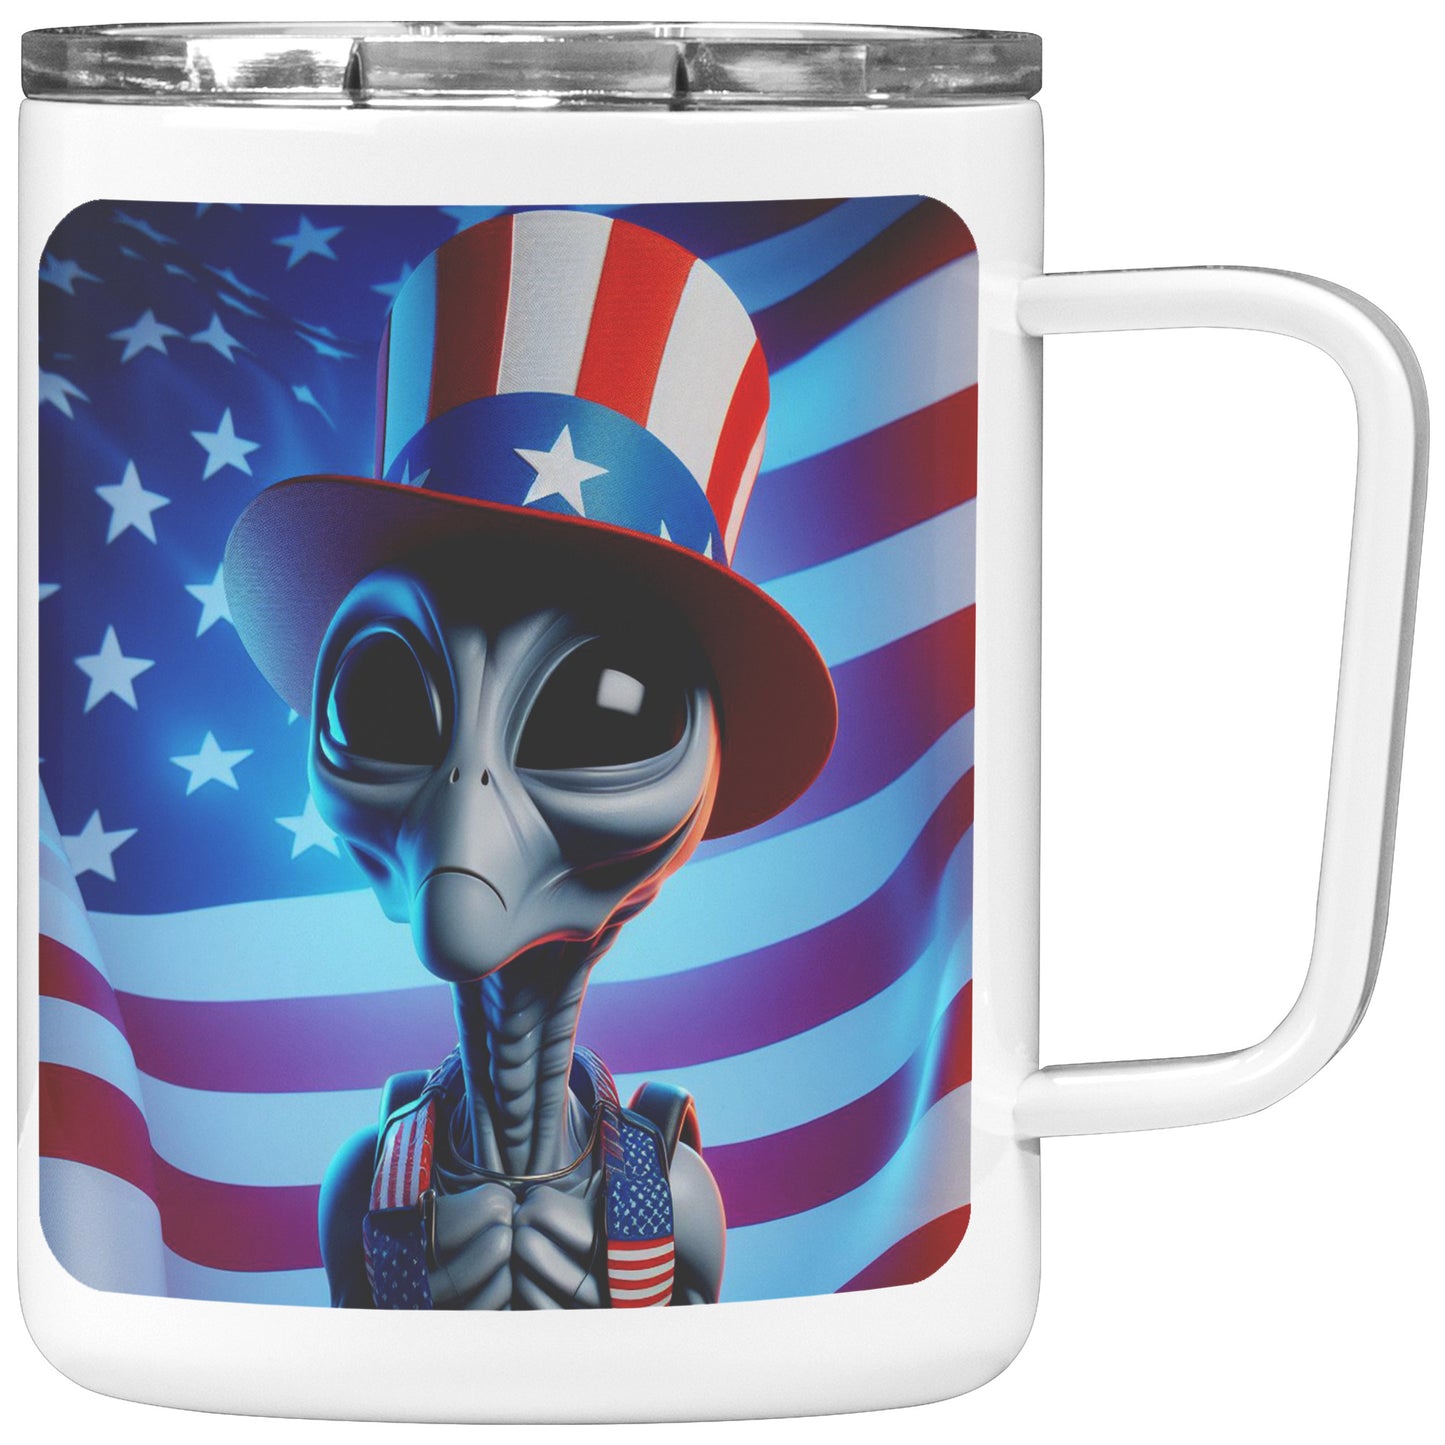 Nebulon the Grey Alien - Insulated Coffee Mug #1